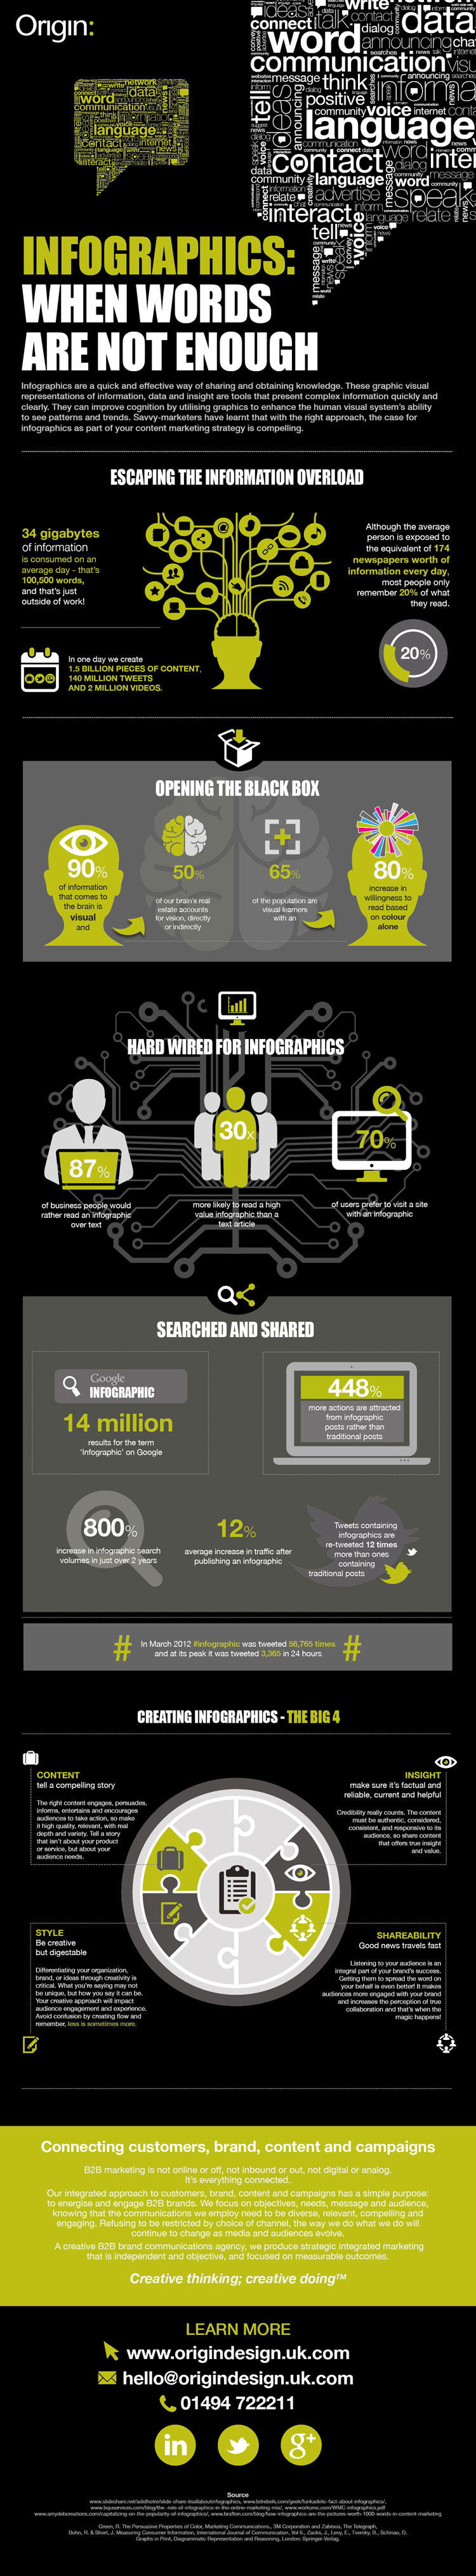 infographic company infographic image